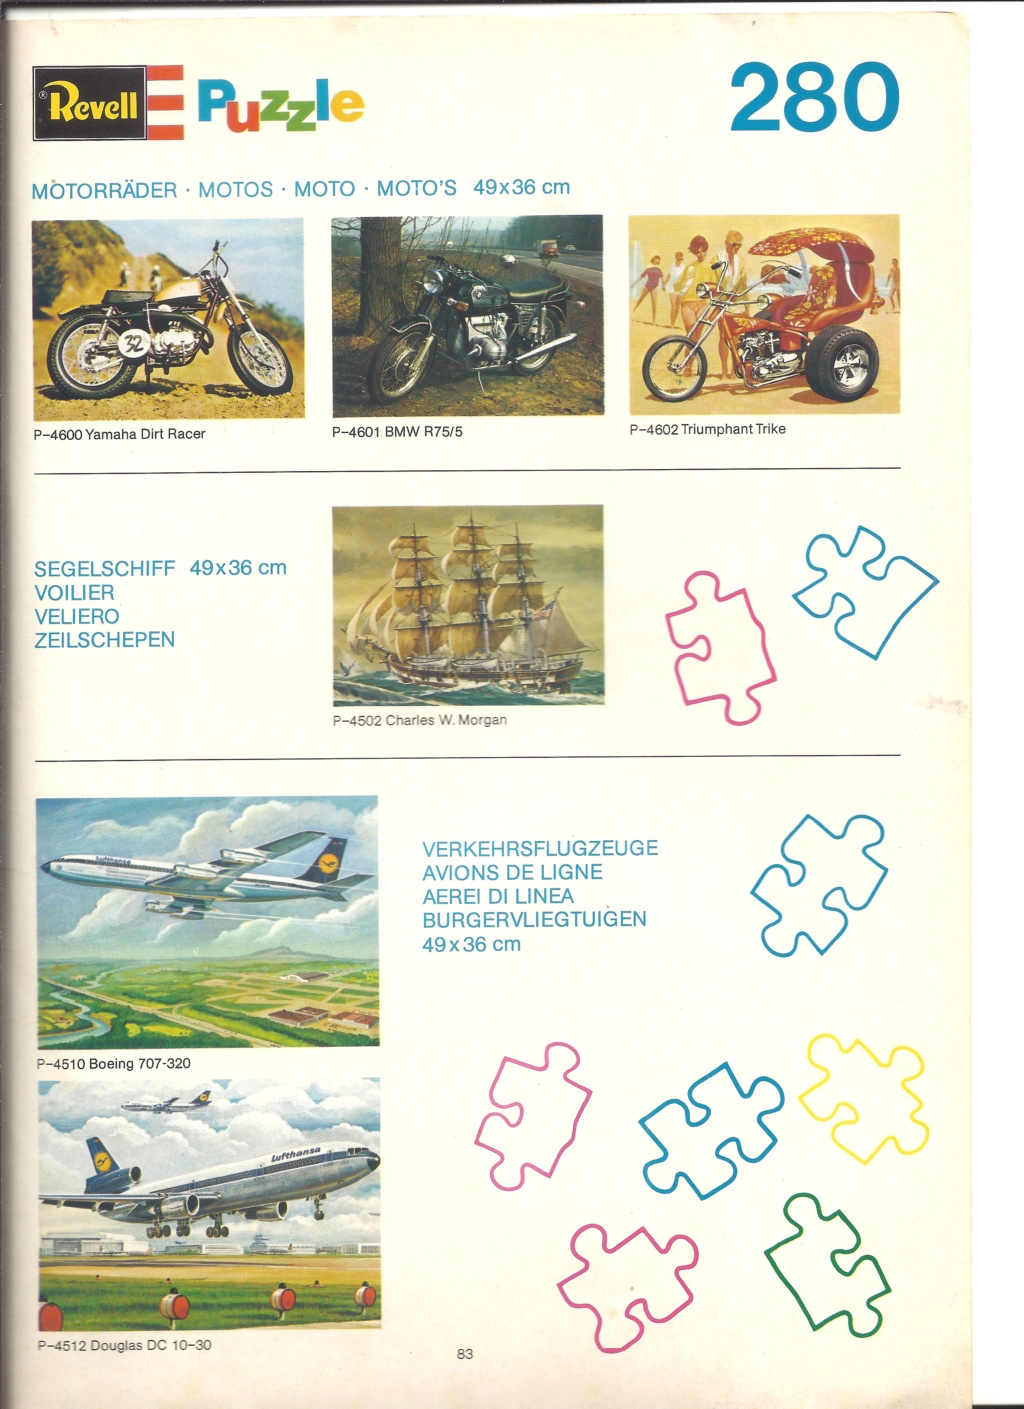 [REVELL 1975] Catalogue 1975  Revel383